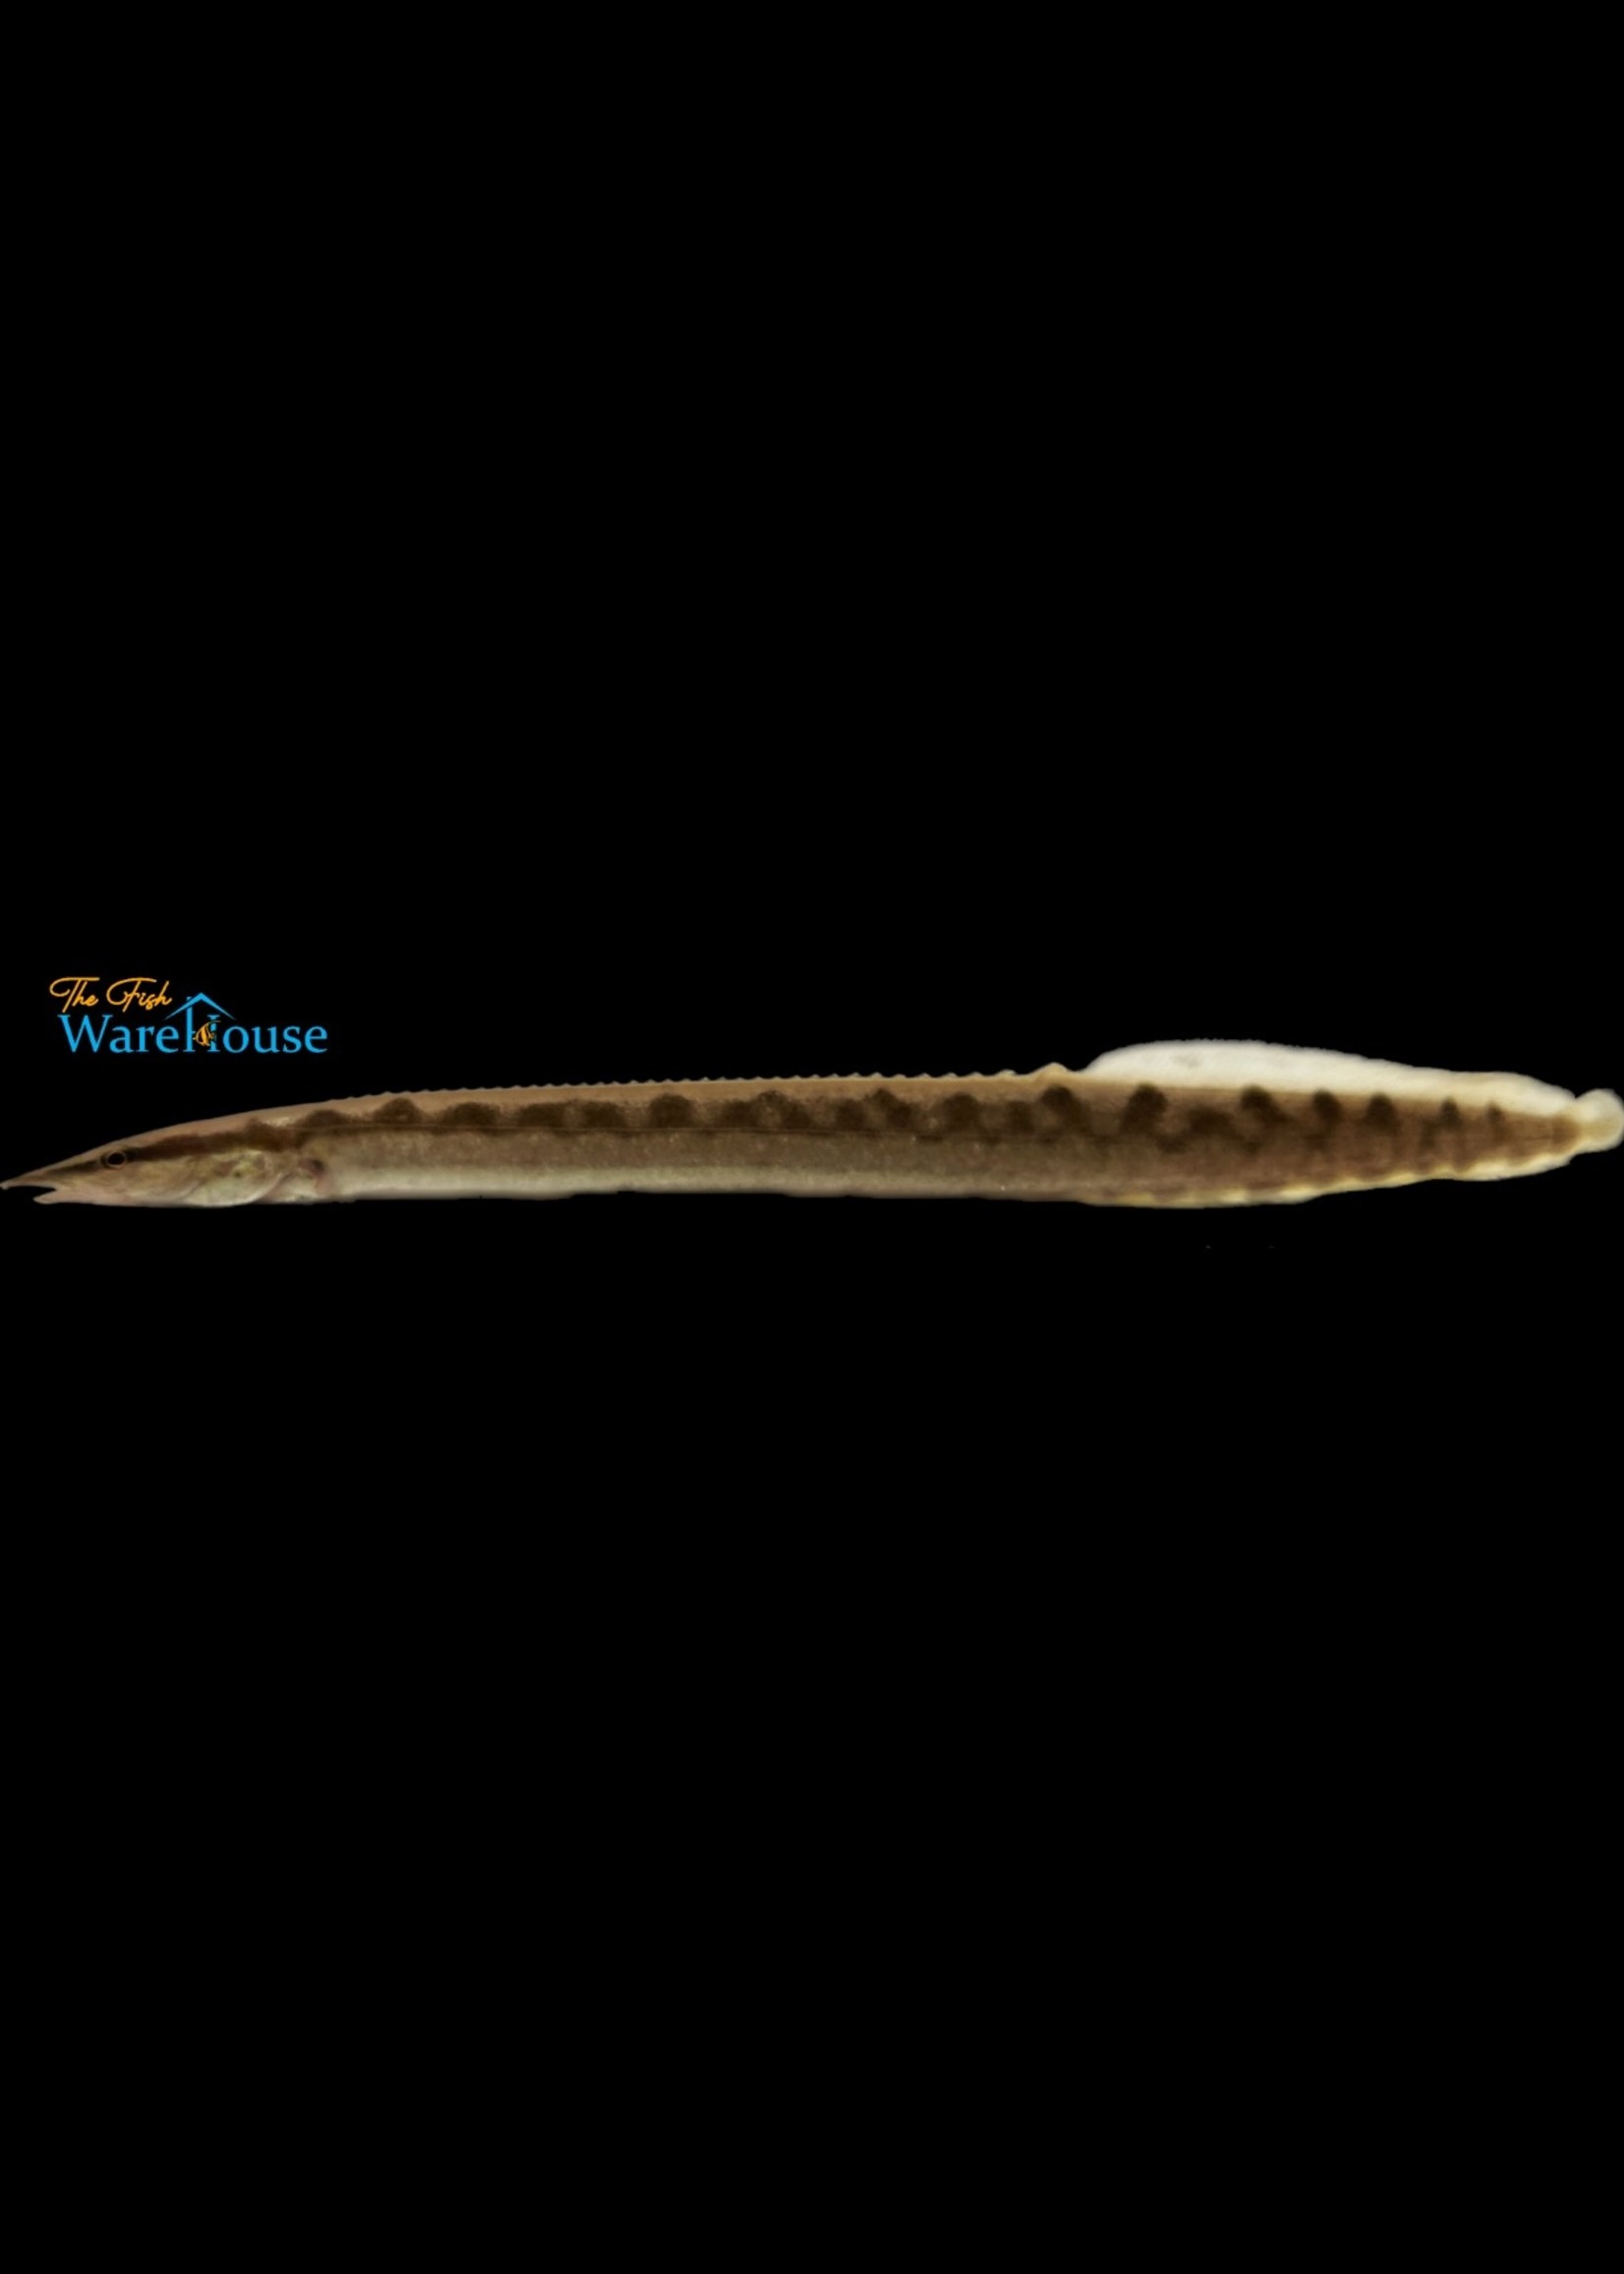 Malabaricus Spiny Eel (Mastacembelus malabaricus)